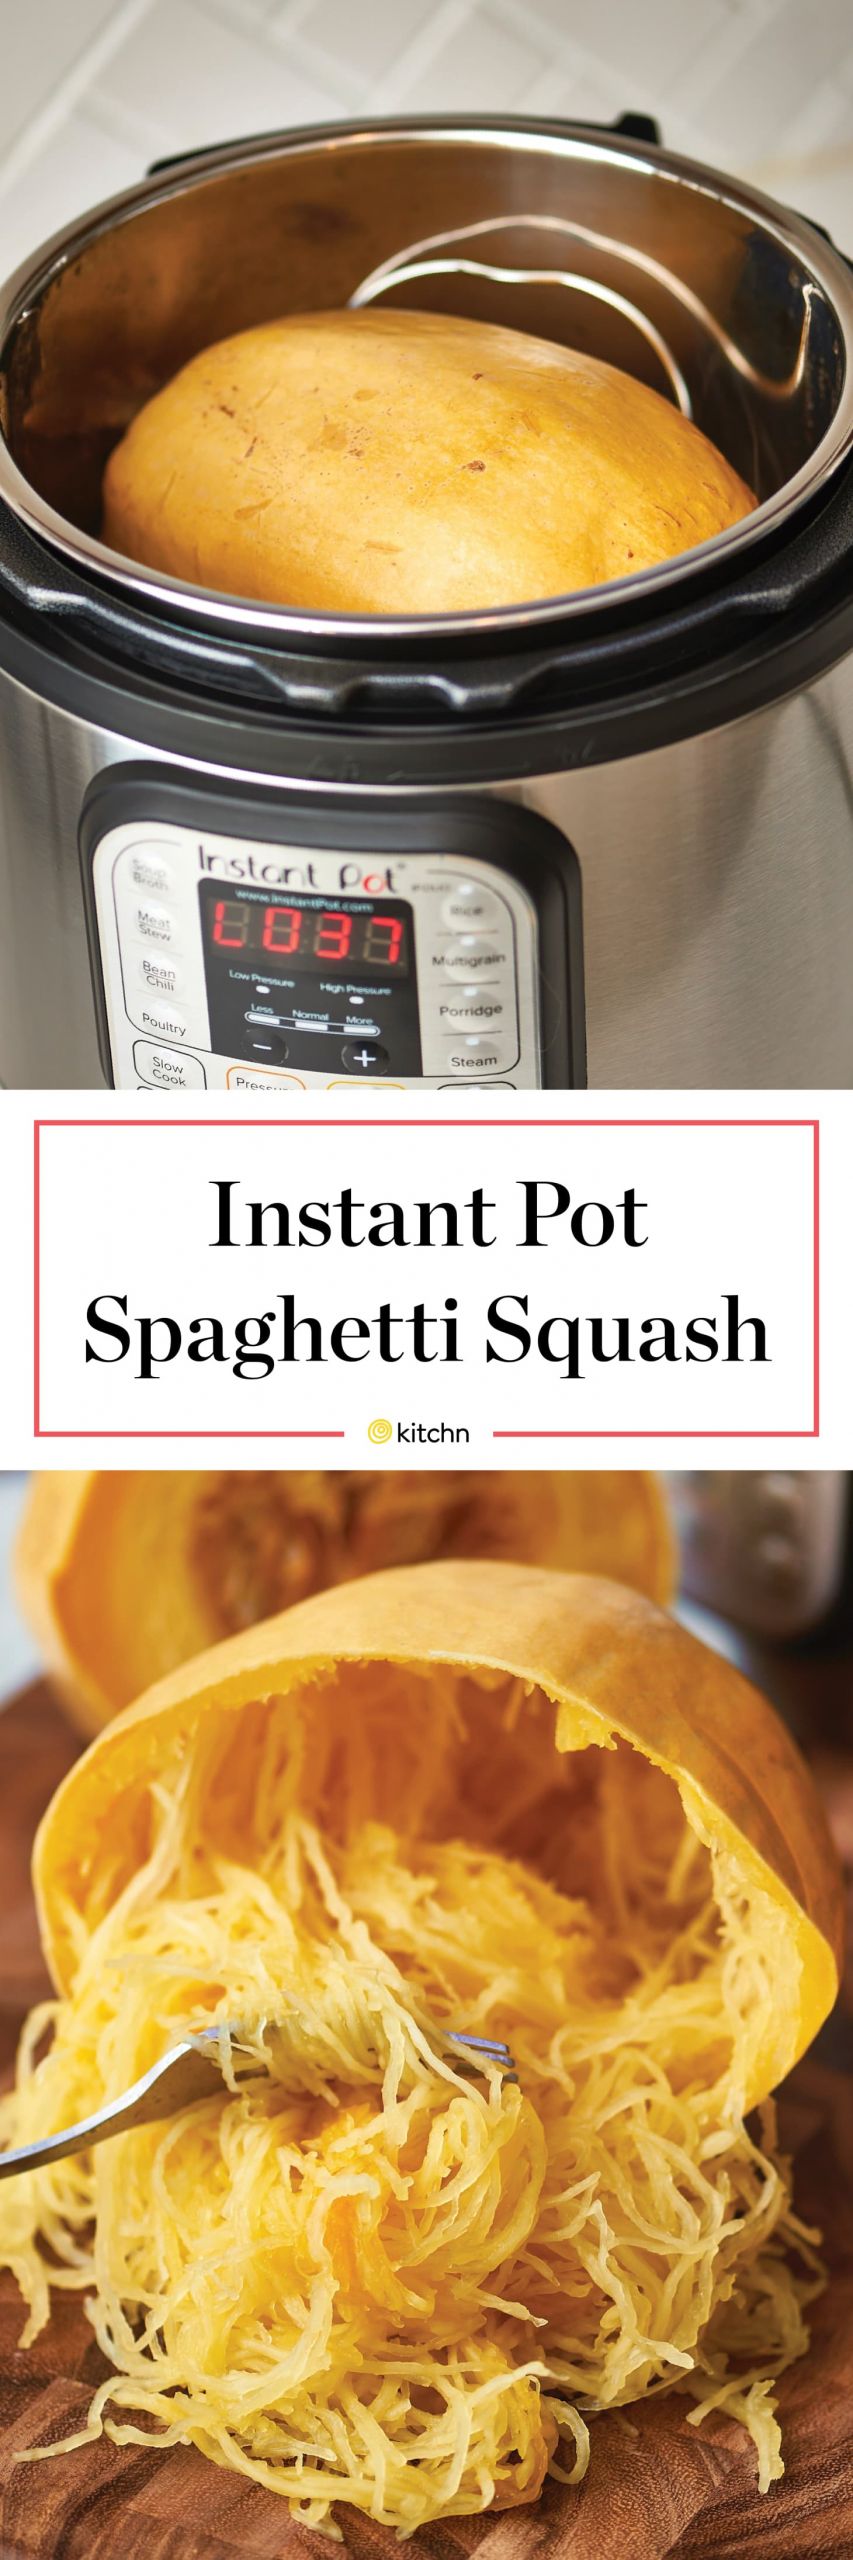 Microwave Spaghetti Squash Whole
 How To Cook Spaghetti Squash in an Electric Pressure